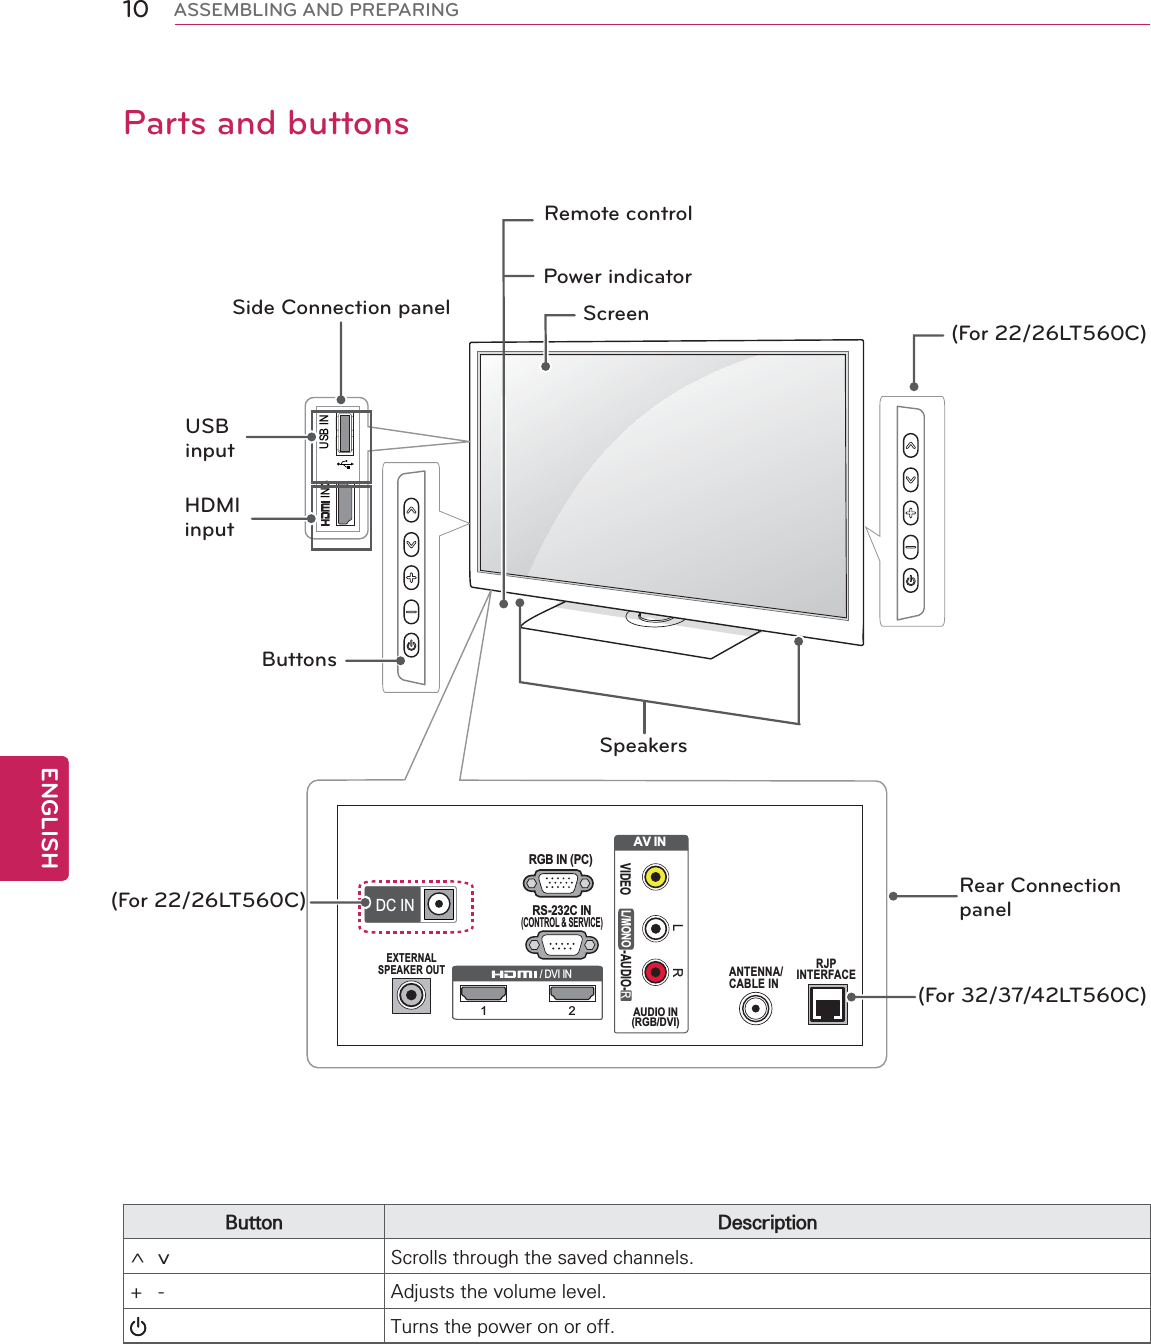 10ENGENGLISHASSEMBLING AND PREPARINGUSB ININ 3 ANTENNA/CABLE INRJPINTERFACEAV INVIDEOL/MONO-AUDIO-RLRAUDIO IN(RGB/DVI)12/ DVI INEXTERNALSPEAKER OUTRS-232C IN(CONTROL &amp; SERVICE)RGB IN (PC)DC INParts and buttonsUSB inputHDMI inputScreenRear Connection panelButtonsSide Connection panelSpeakersRemote controlPower indicator(For 22/26LT560C). (5AY6FUROOVWKURXJKWKHVDYHGFKDQQHOV $GMXVWVWKHYROXPHOHYHO 7XUQVWKHSRZHURQRURII(For 22/26LT560C)(For 32/37/42LT560C)